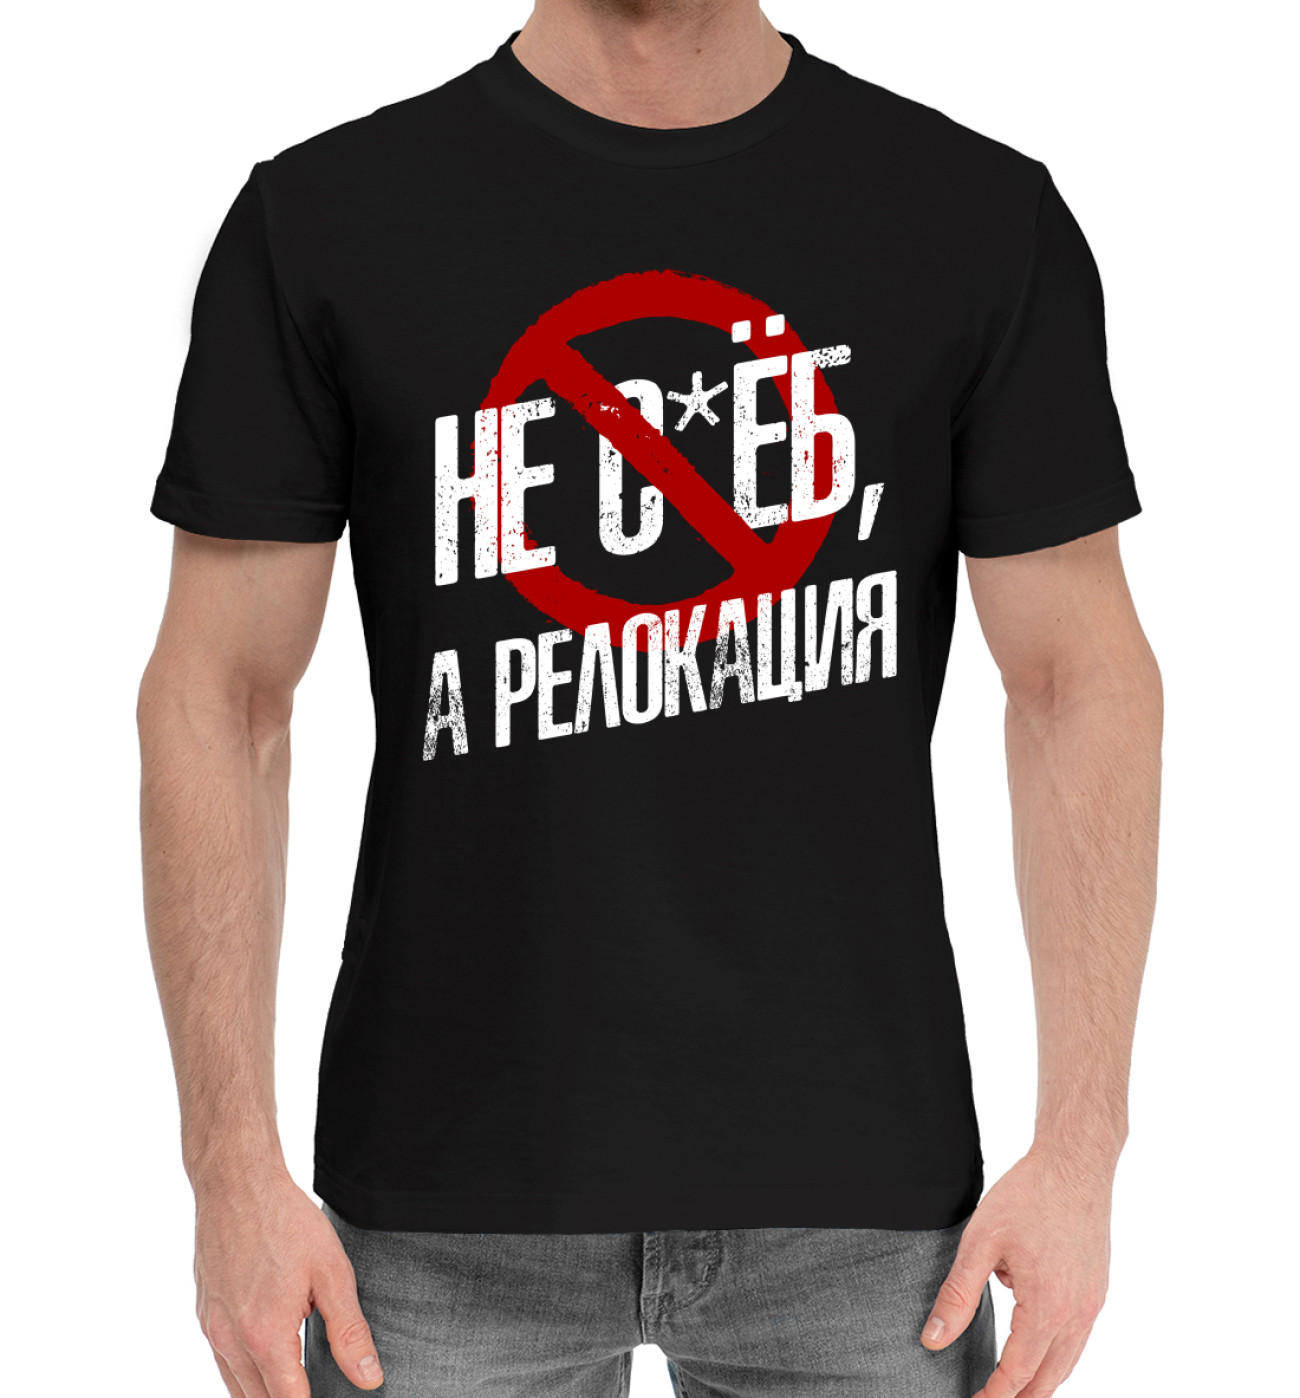 Мужская Хлопковая футболка Не с*ёб, а релокация, артикул: NDP-653195-hfu-2